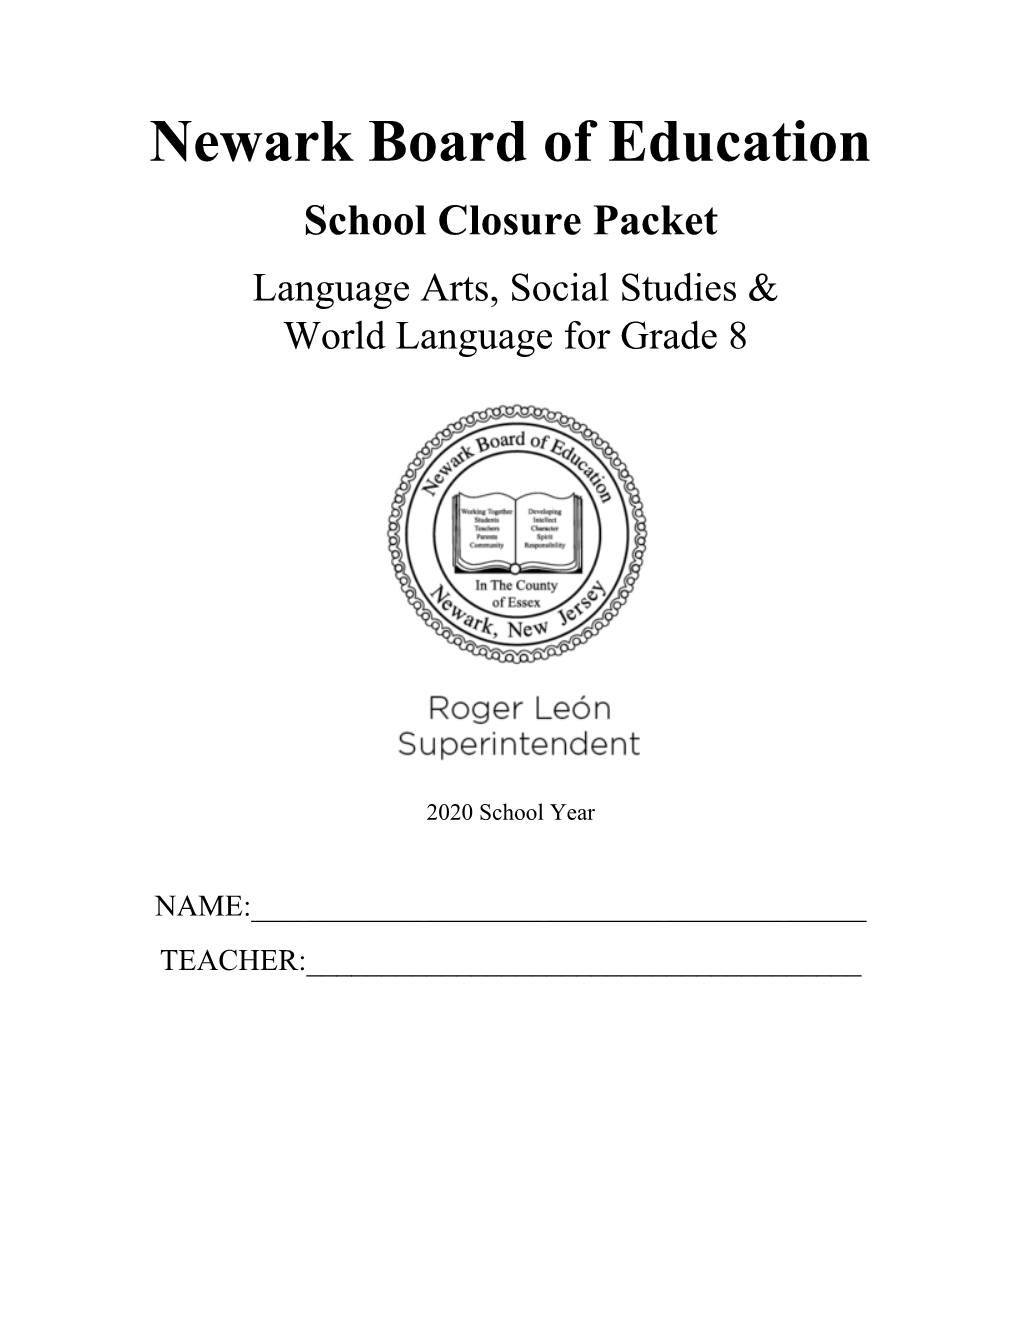 School Closure Packet Language Arts, Social Studies & World Language for Grade 8